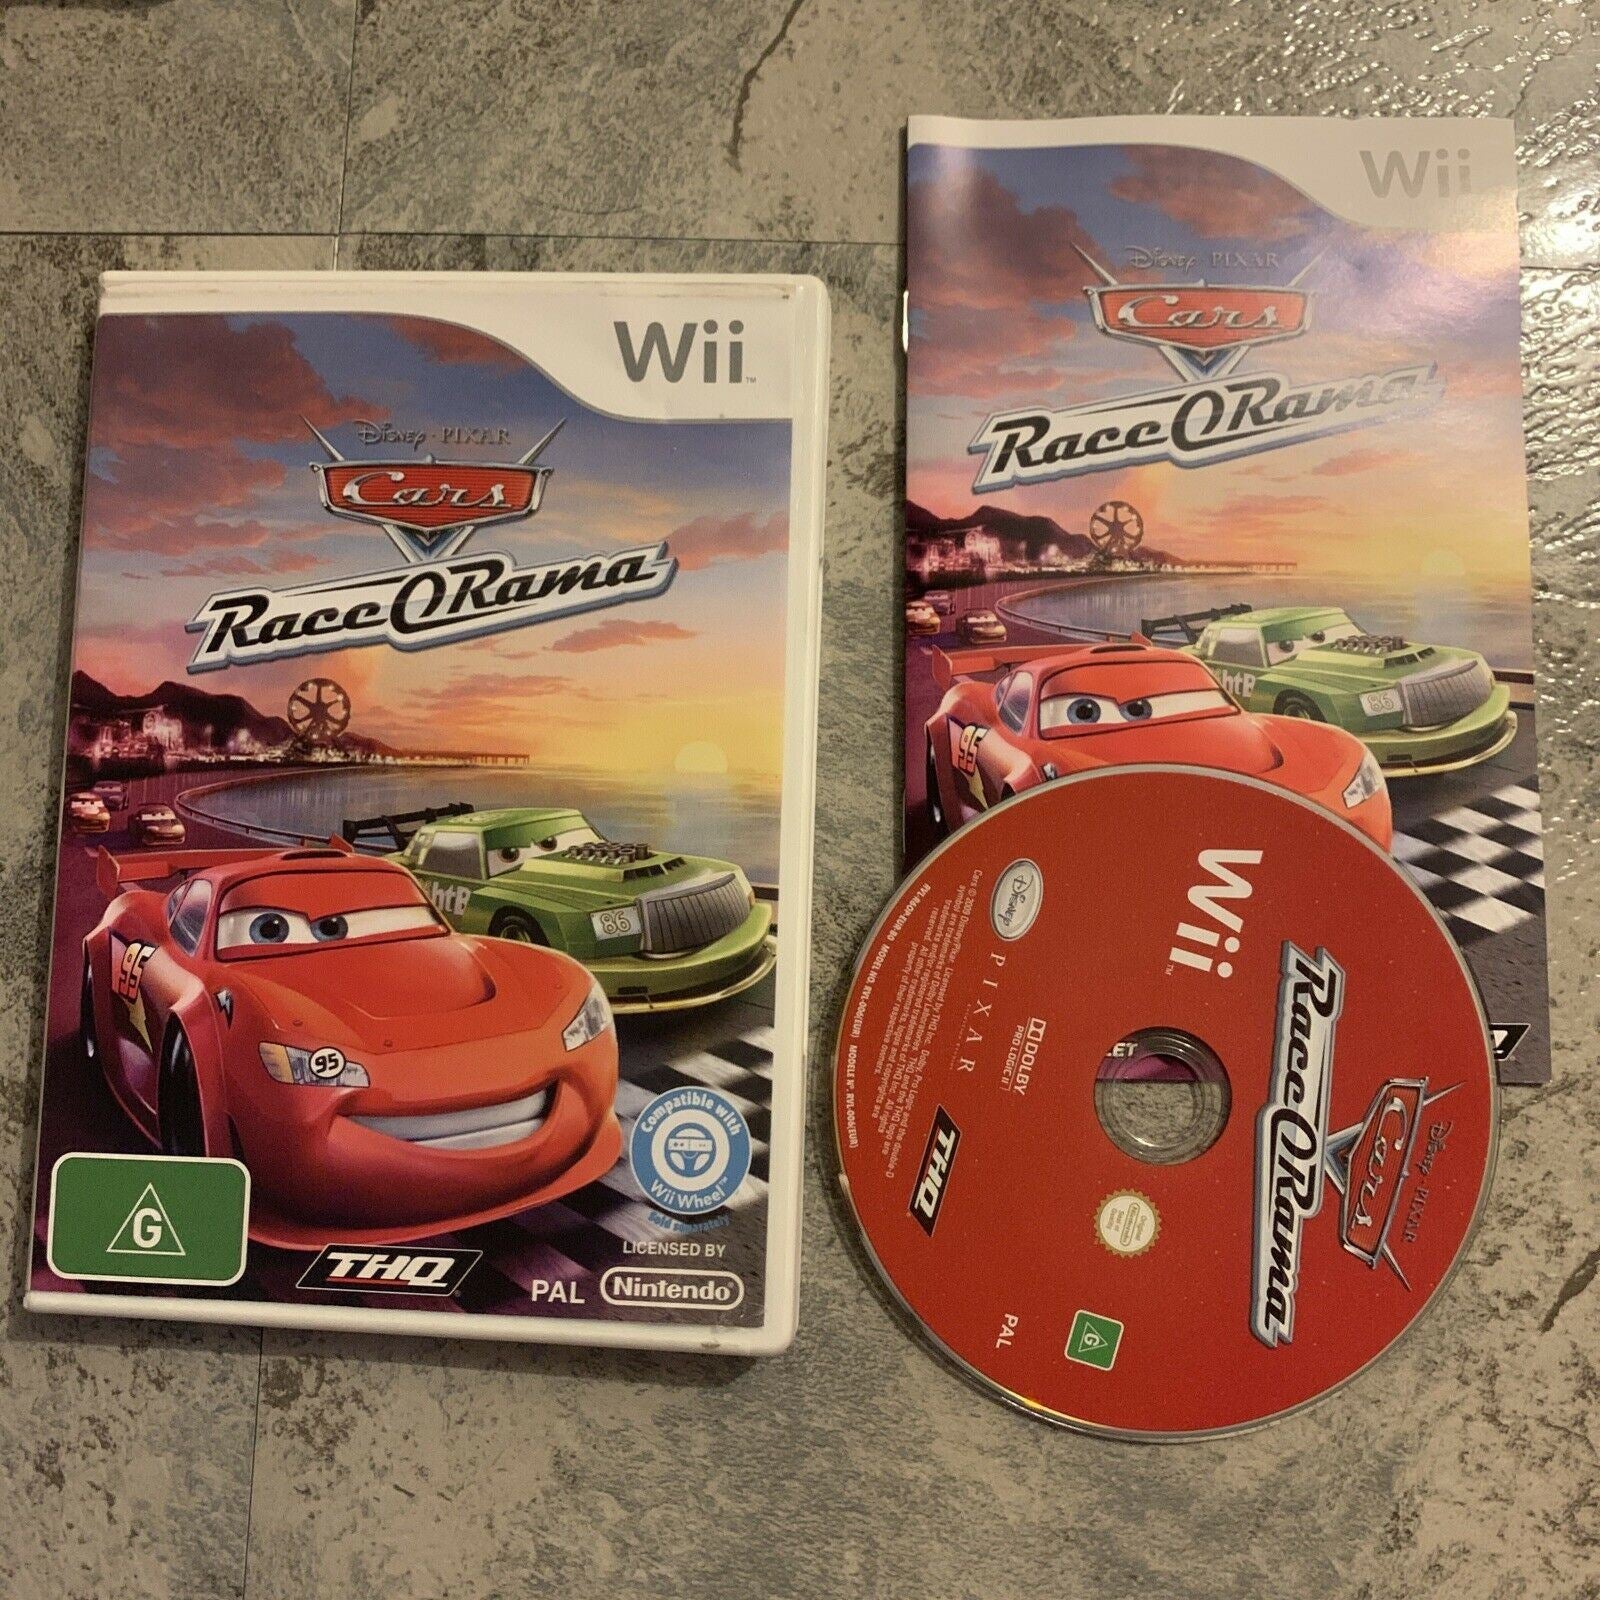 Disney Pixar Cars Race O-Rama - PlayStation PS2 PAL Game – Retro Unit